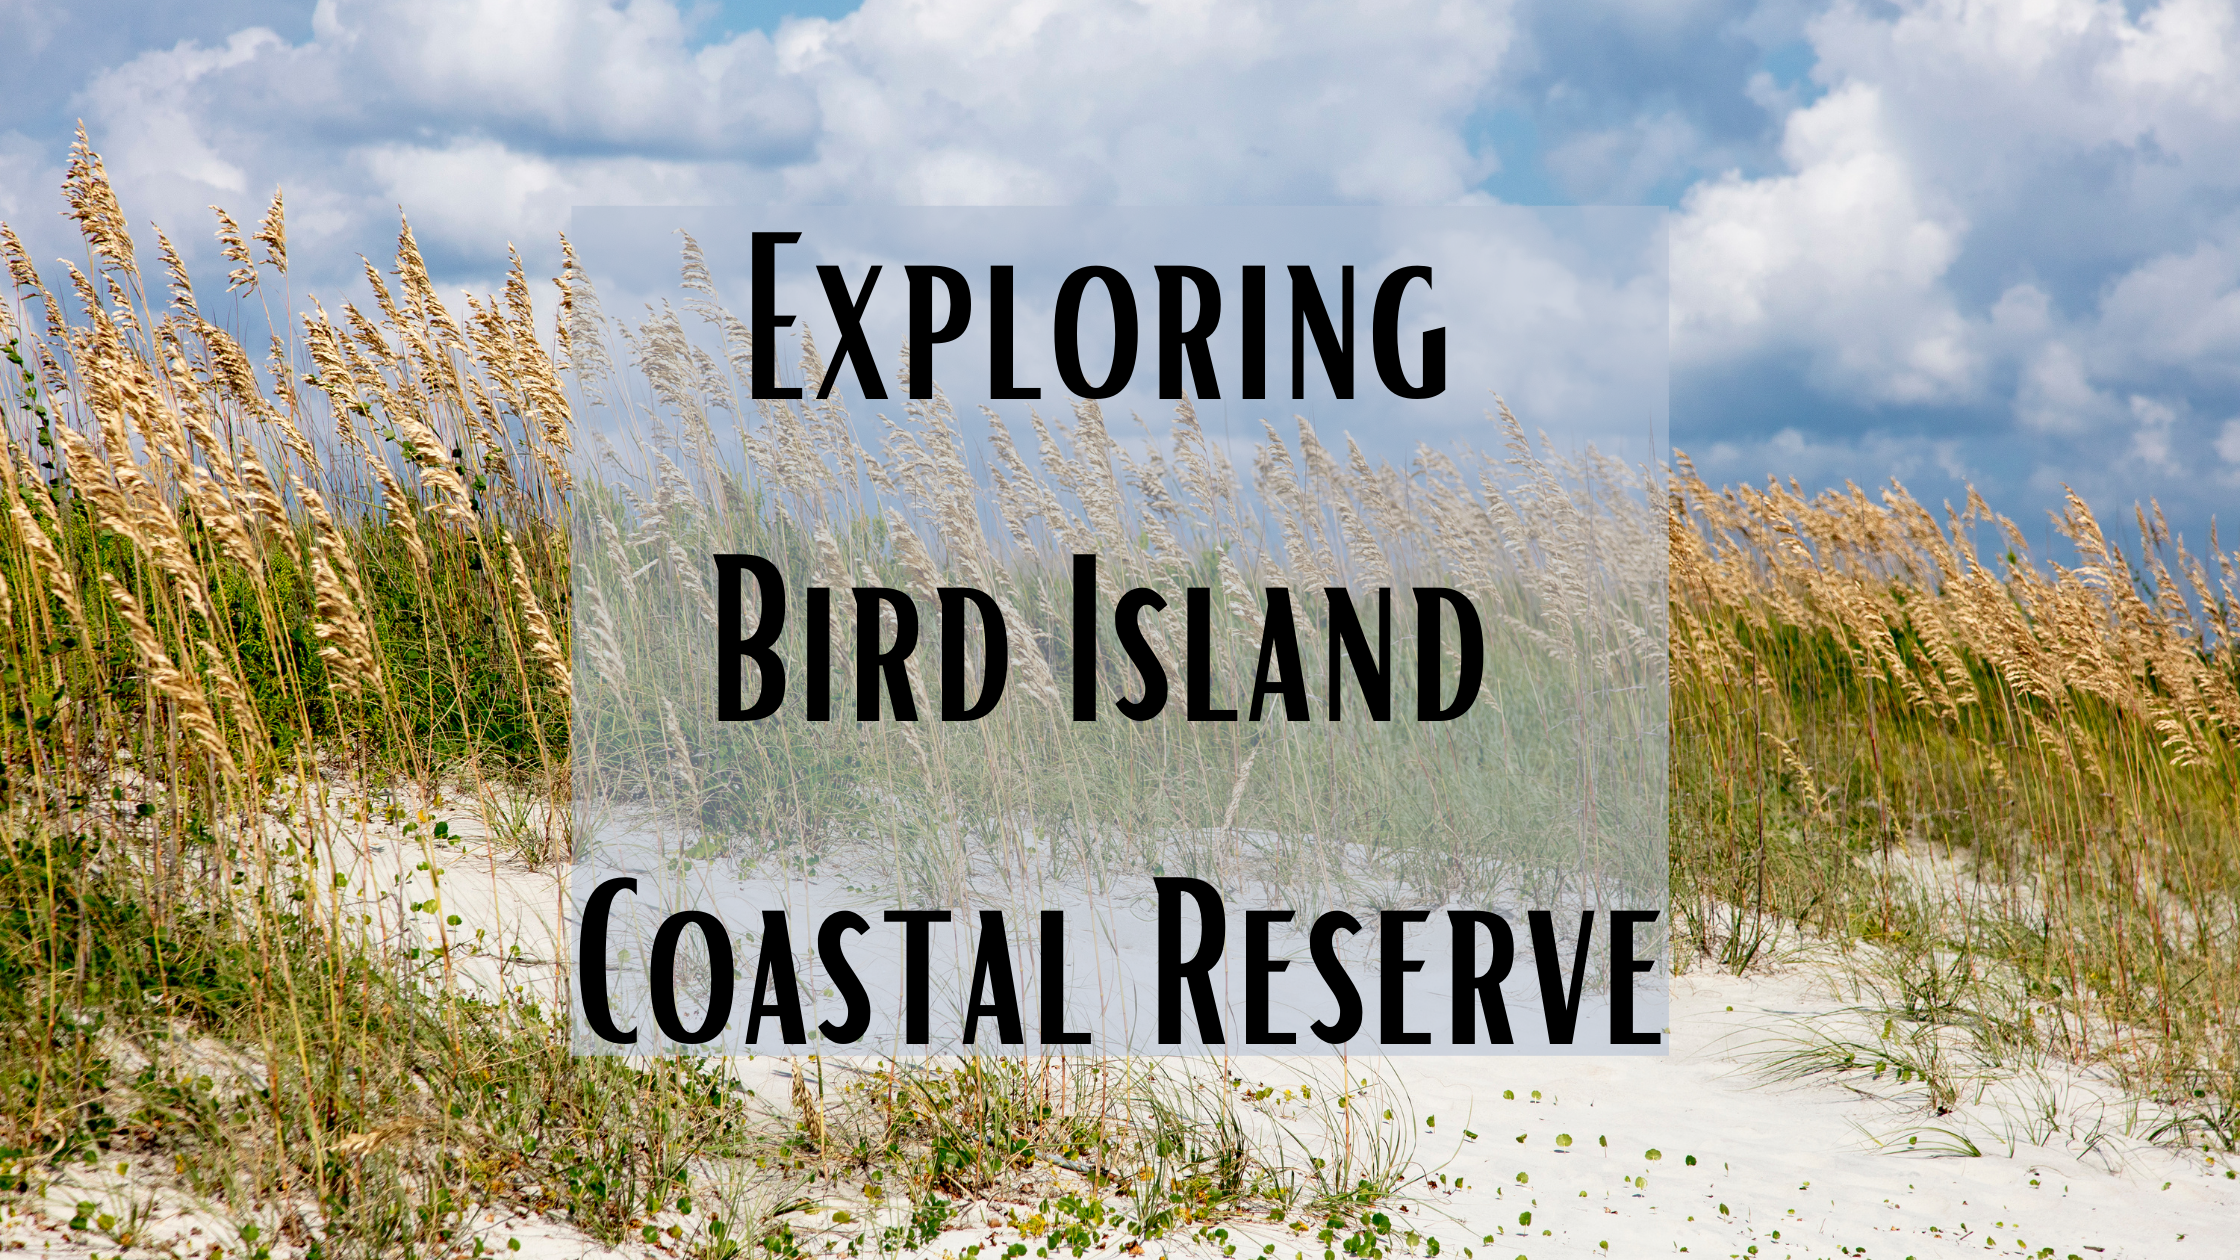 Bird Island Coastal Reserve 